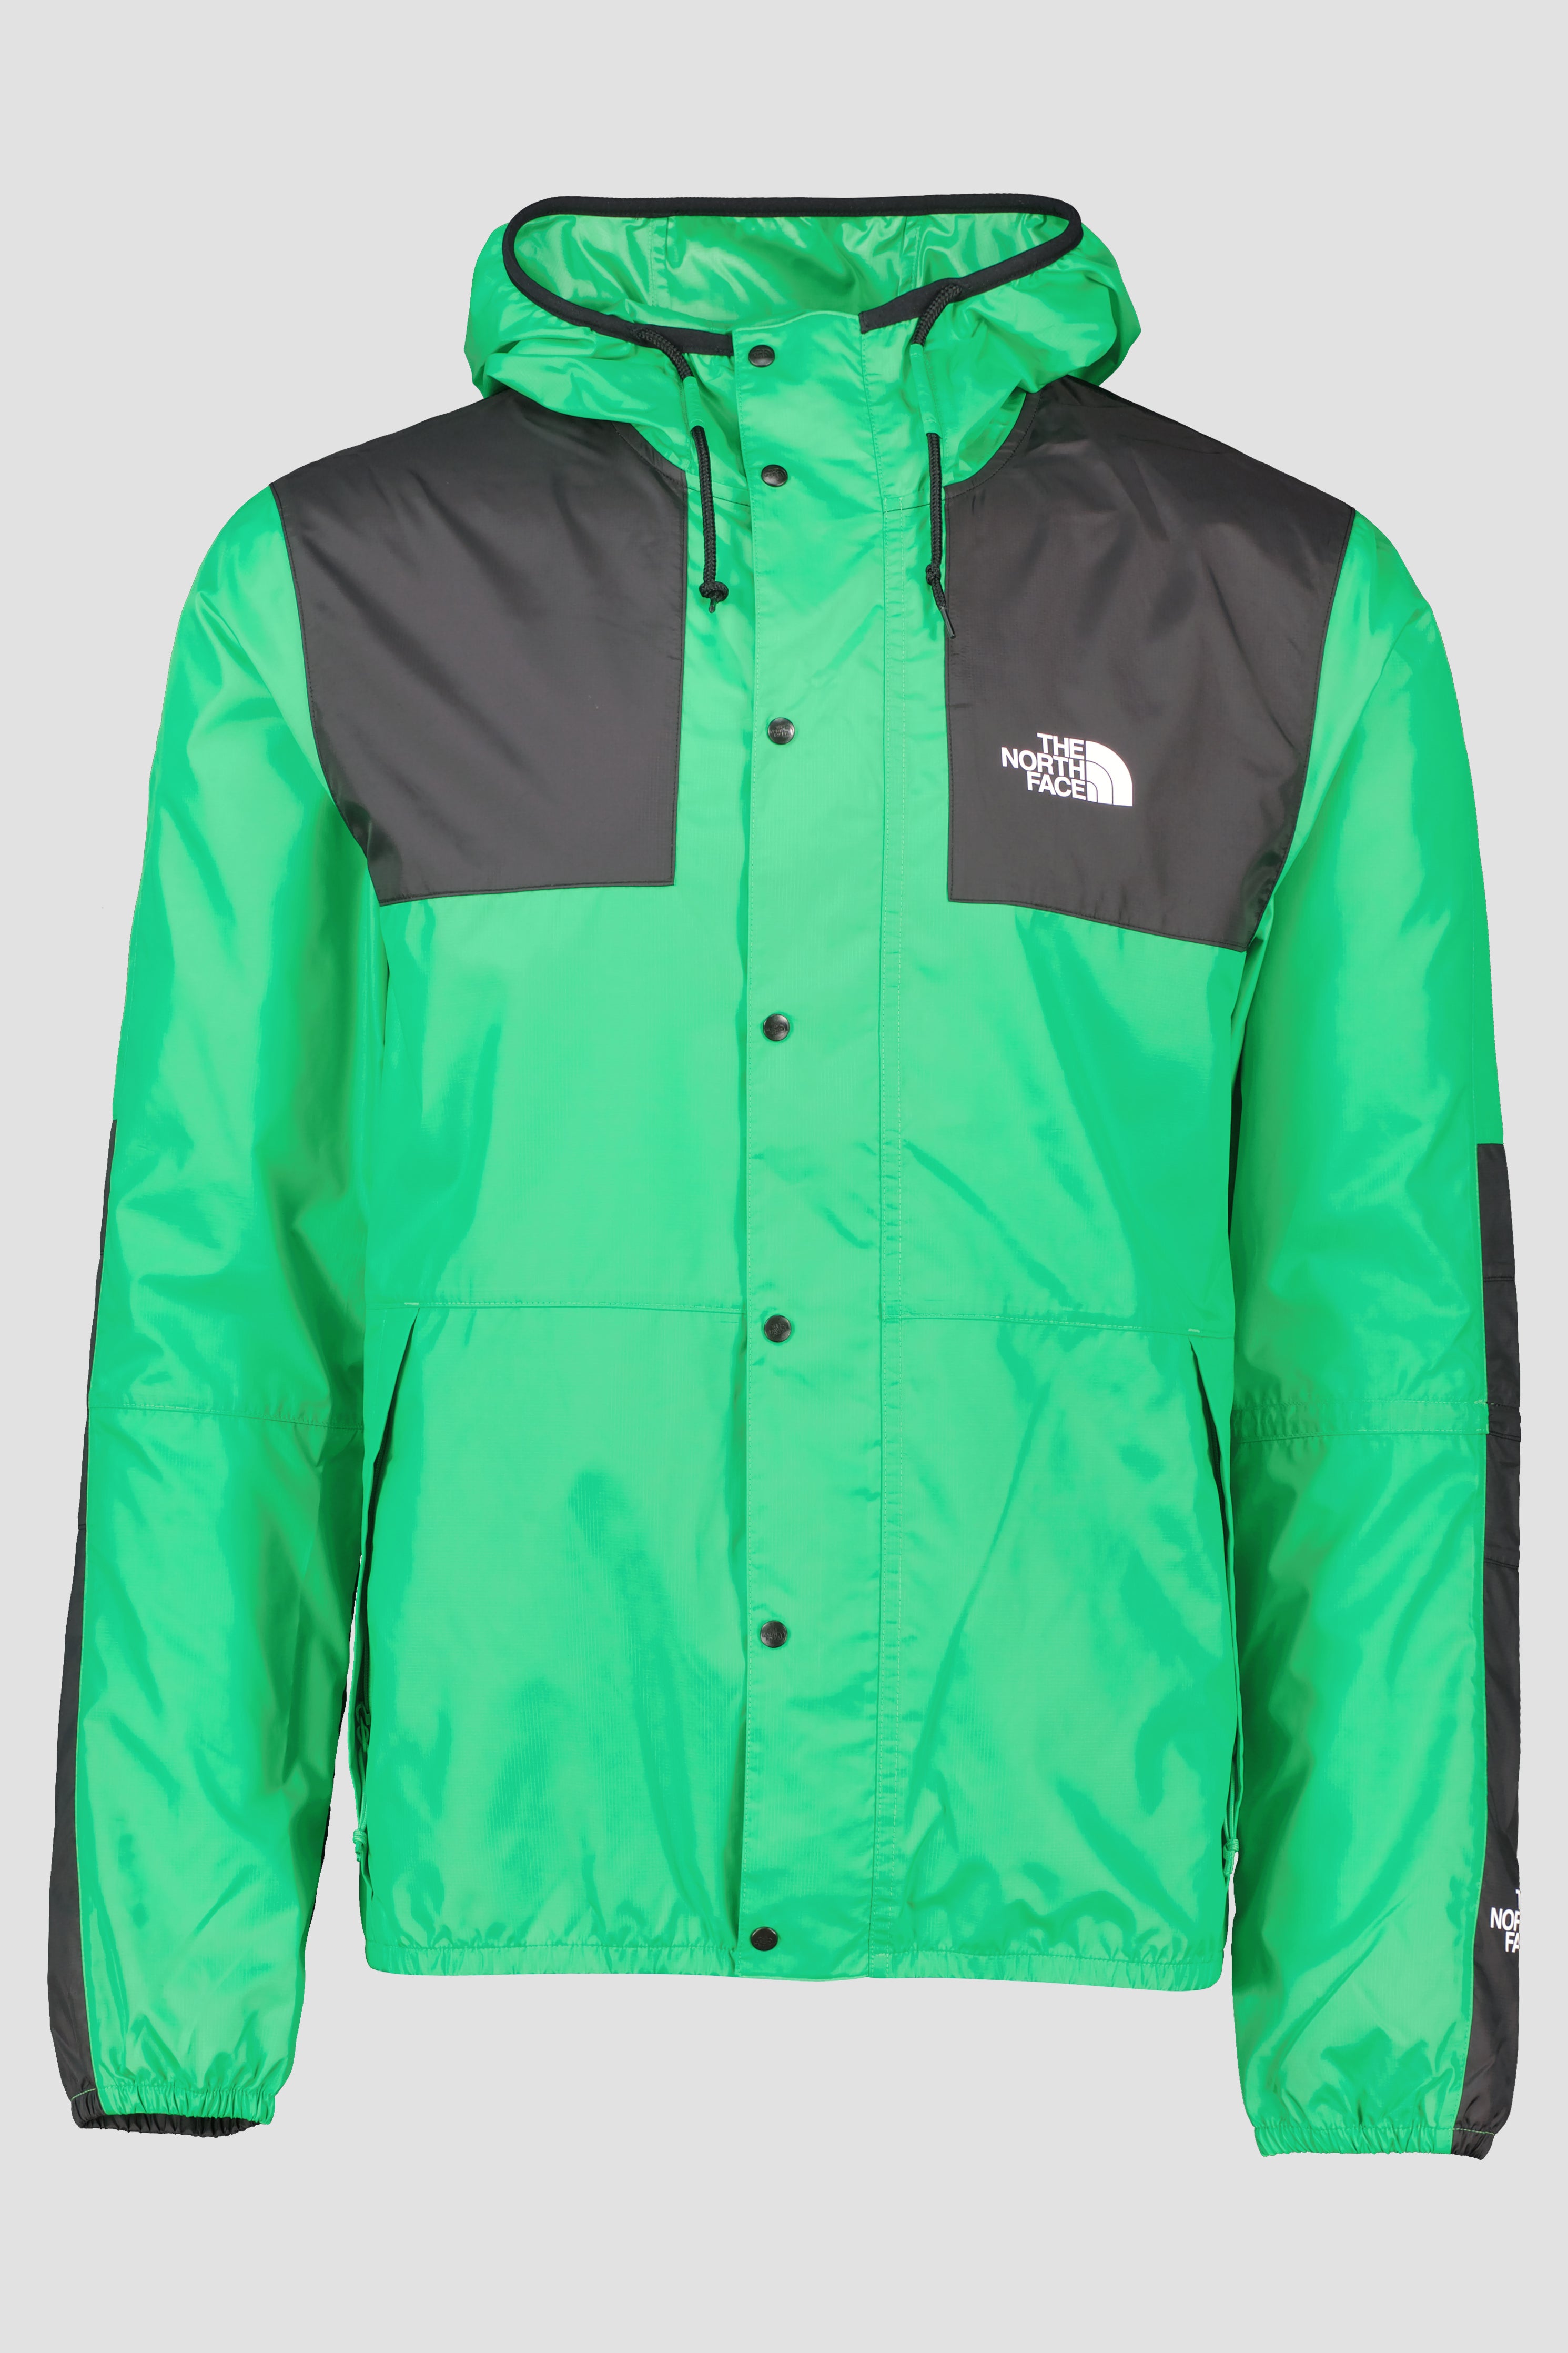 Men's The North Face Optic Emerald Jacket